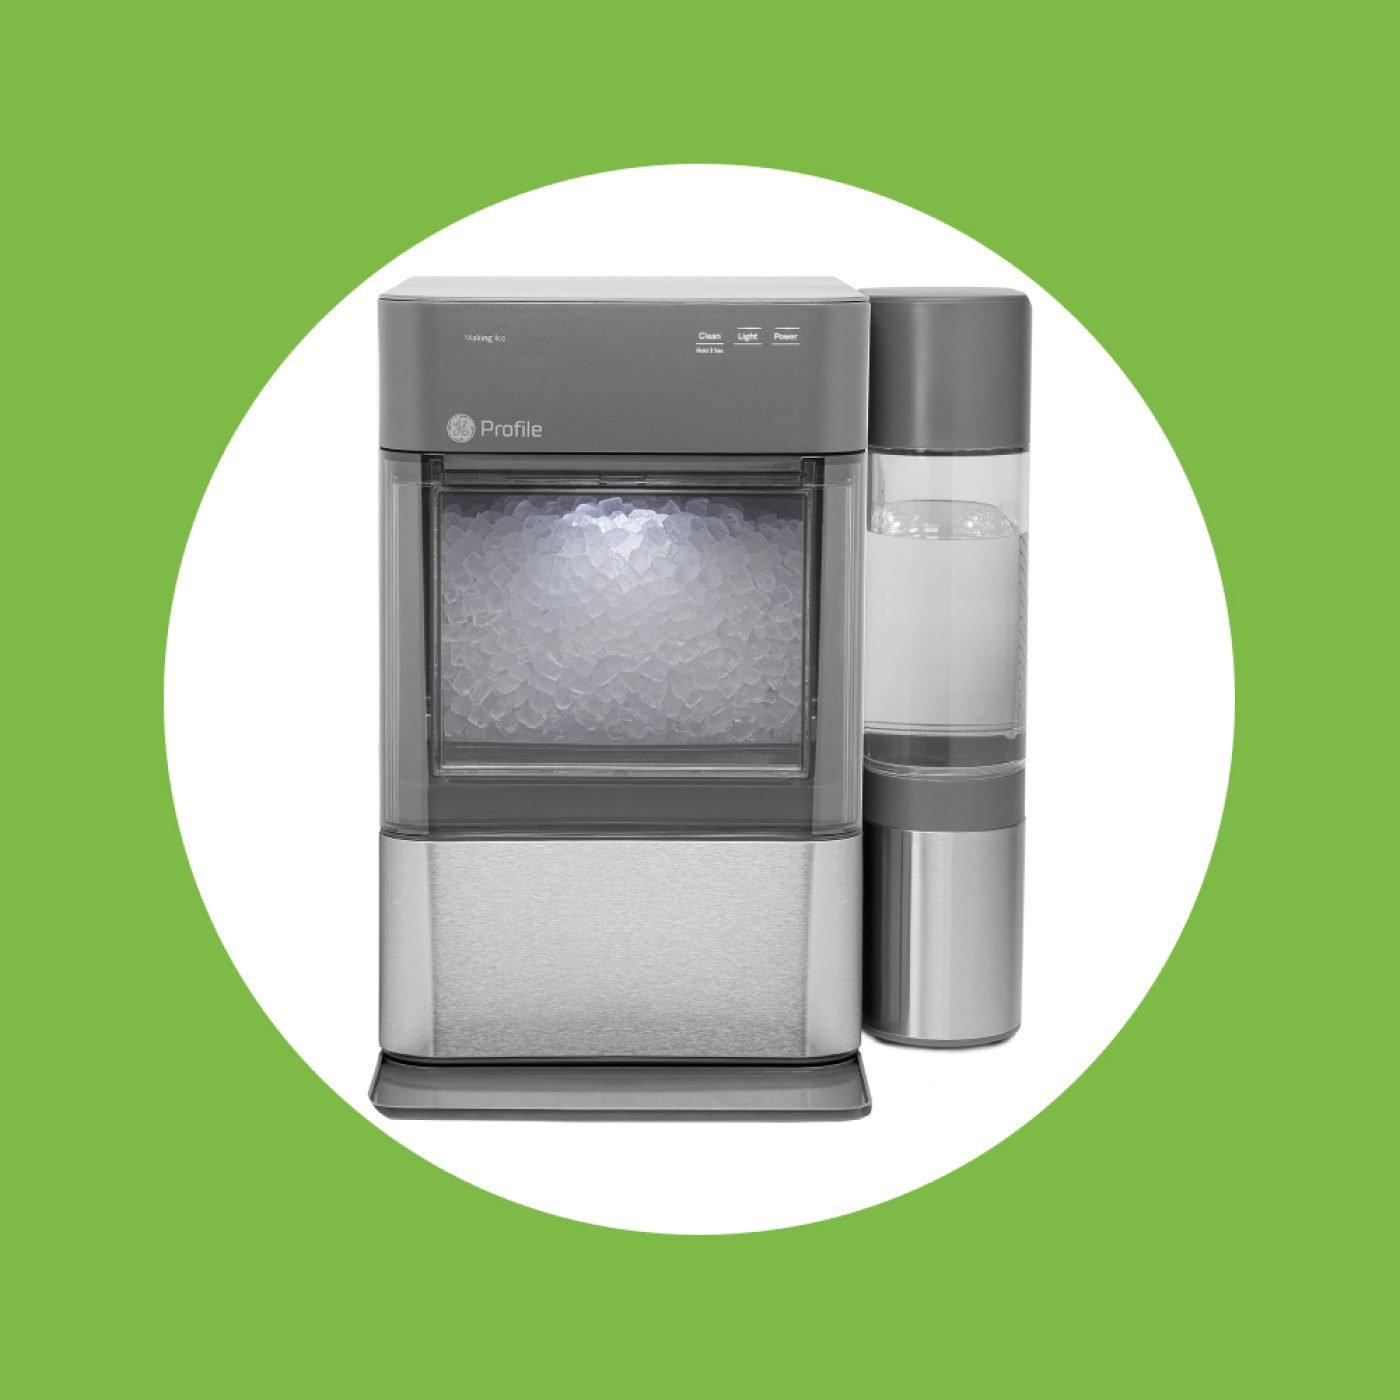 GE announces new countertop appliances - Reviewed